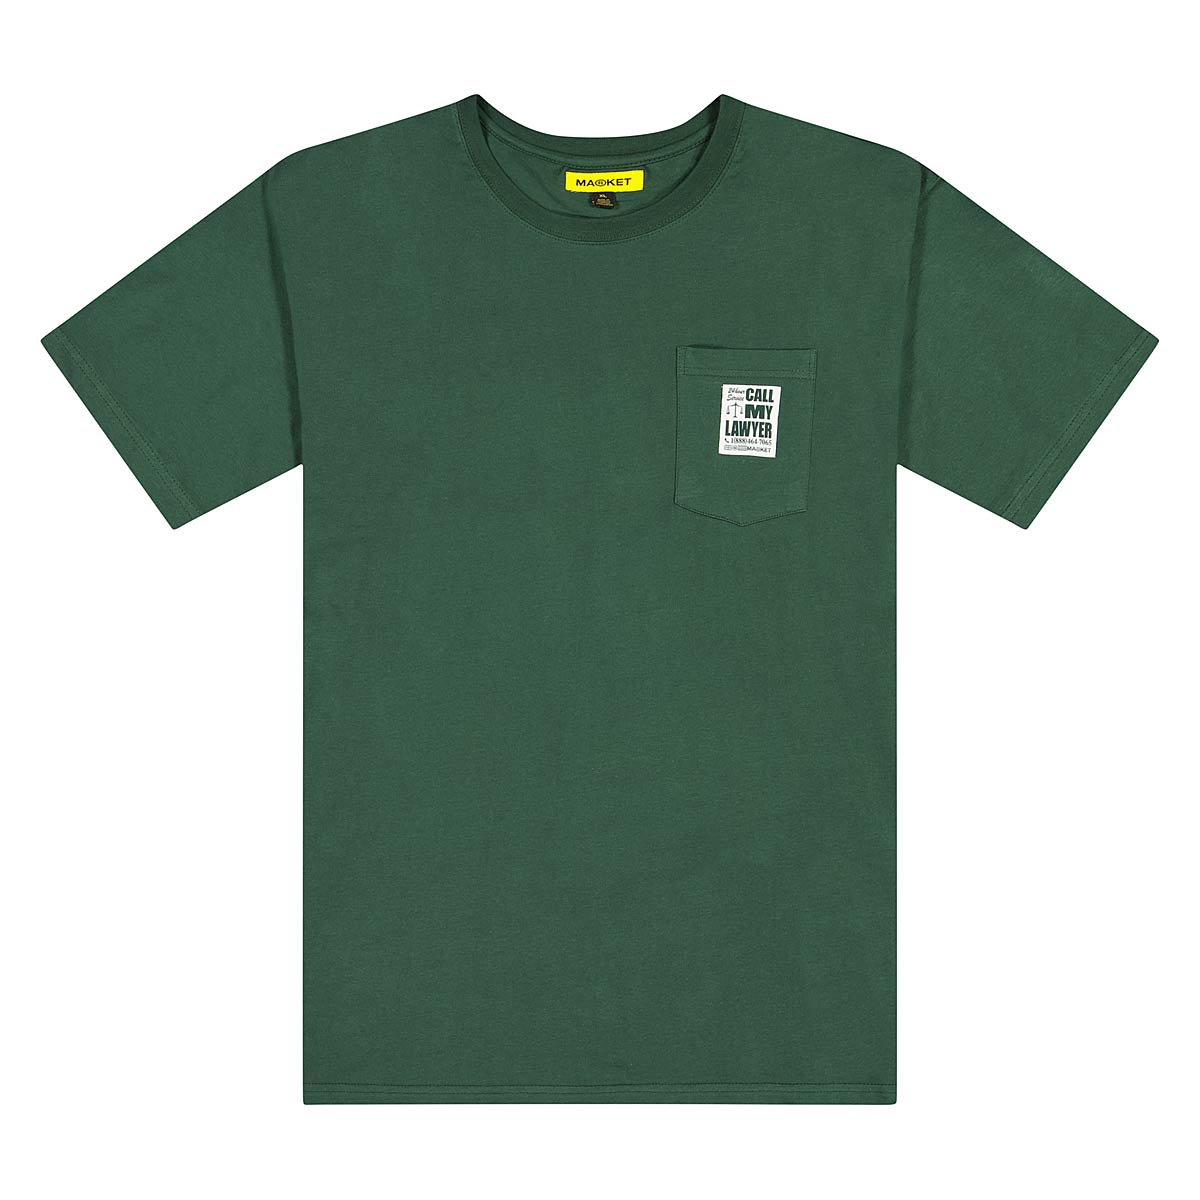 Market 24 Hr Lawyer Service Pocket T-Shirt, Evergreen